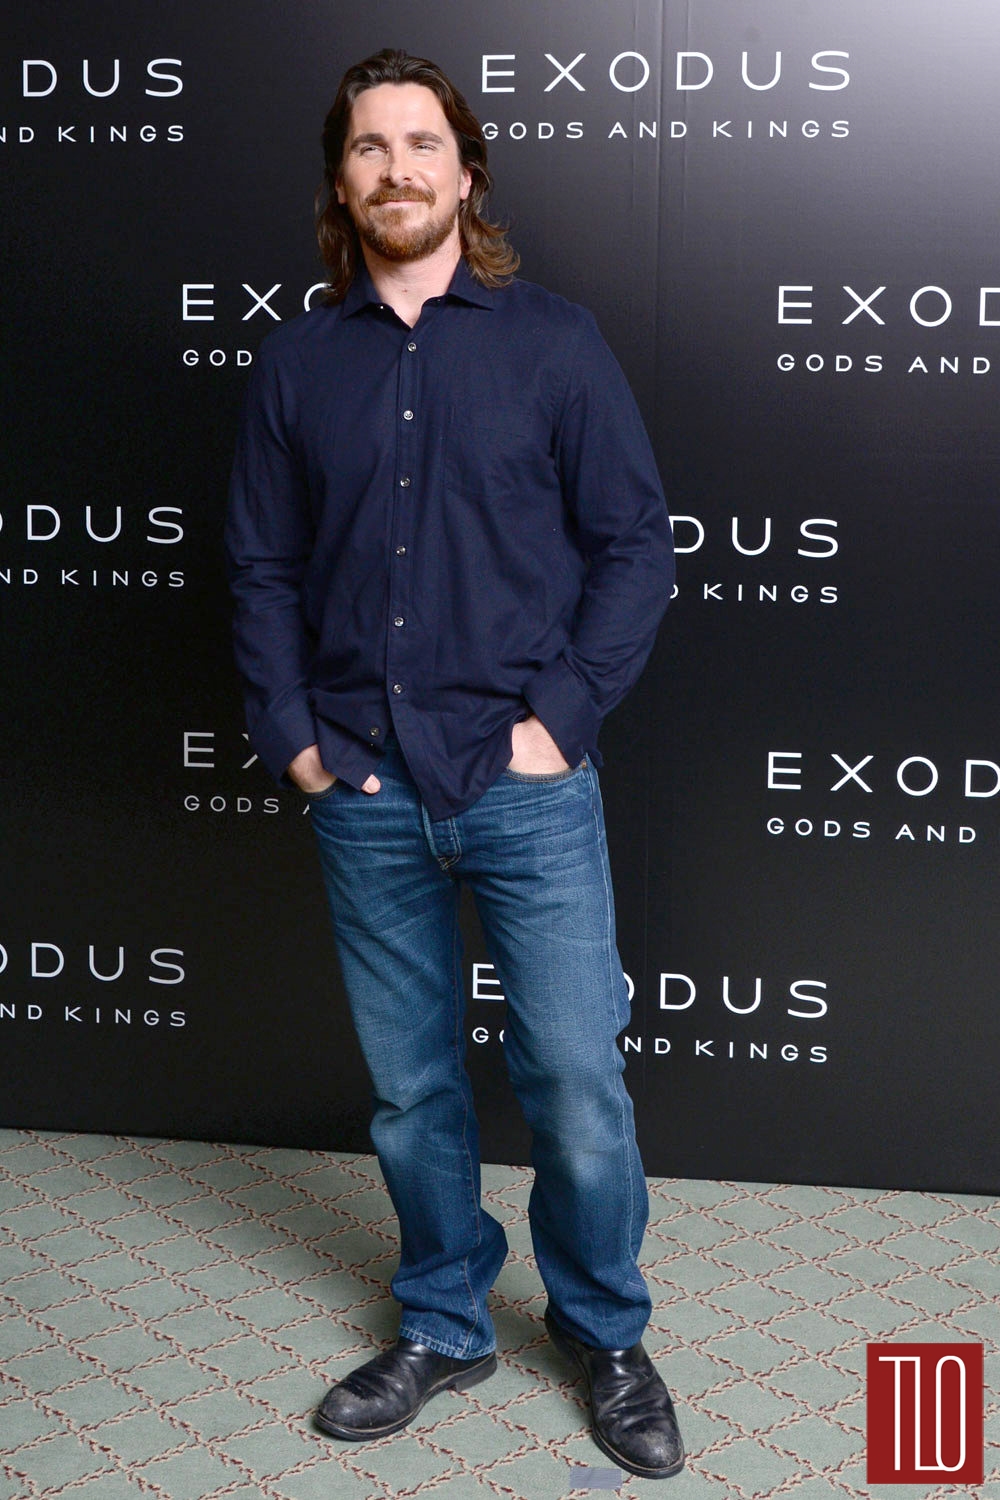 Christian-Bale-Exodus-Gos-Kings-Movie-Paris-Photocall-Red-Carpet-Tom-LOrenzo-Site-TLO (1)